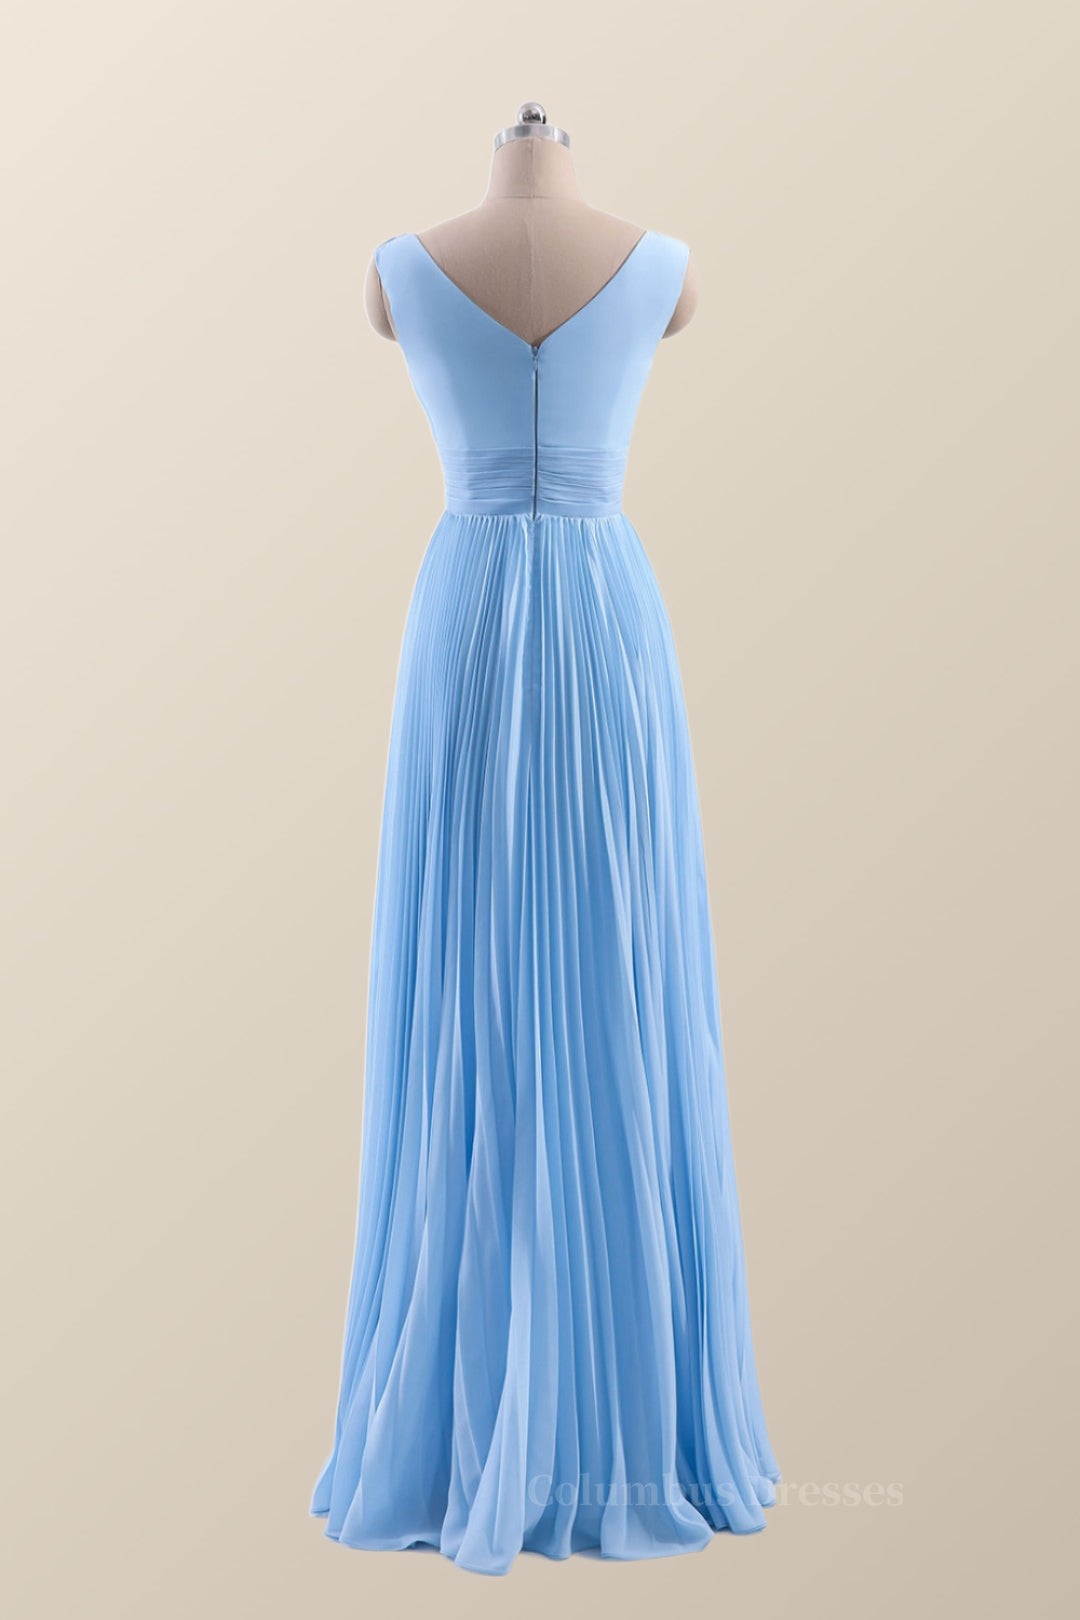 Party Dress Maxi, V Neck Blue Chiffon A-line Long Bridesmaid Dress